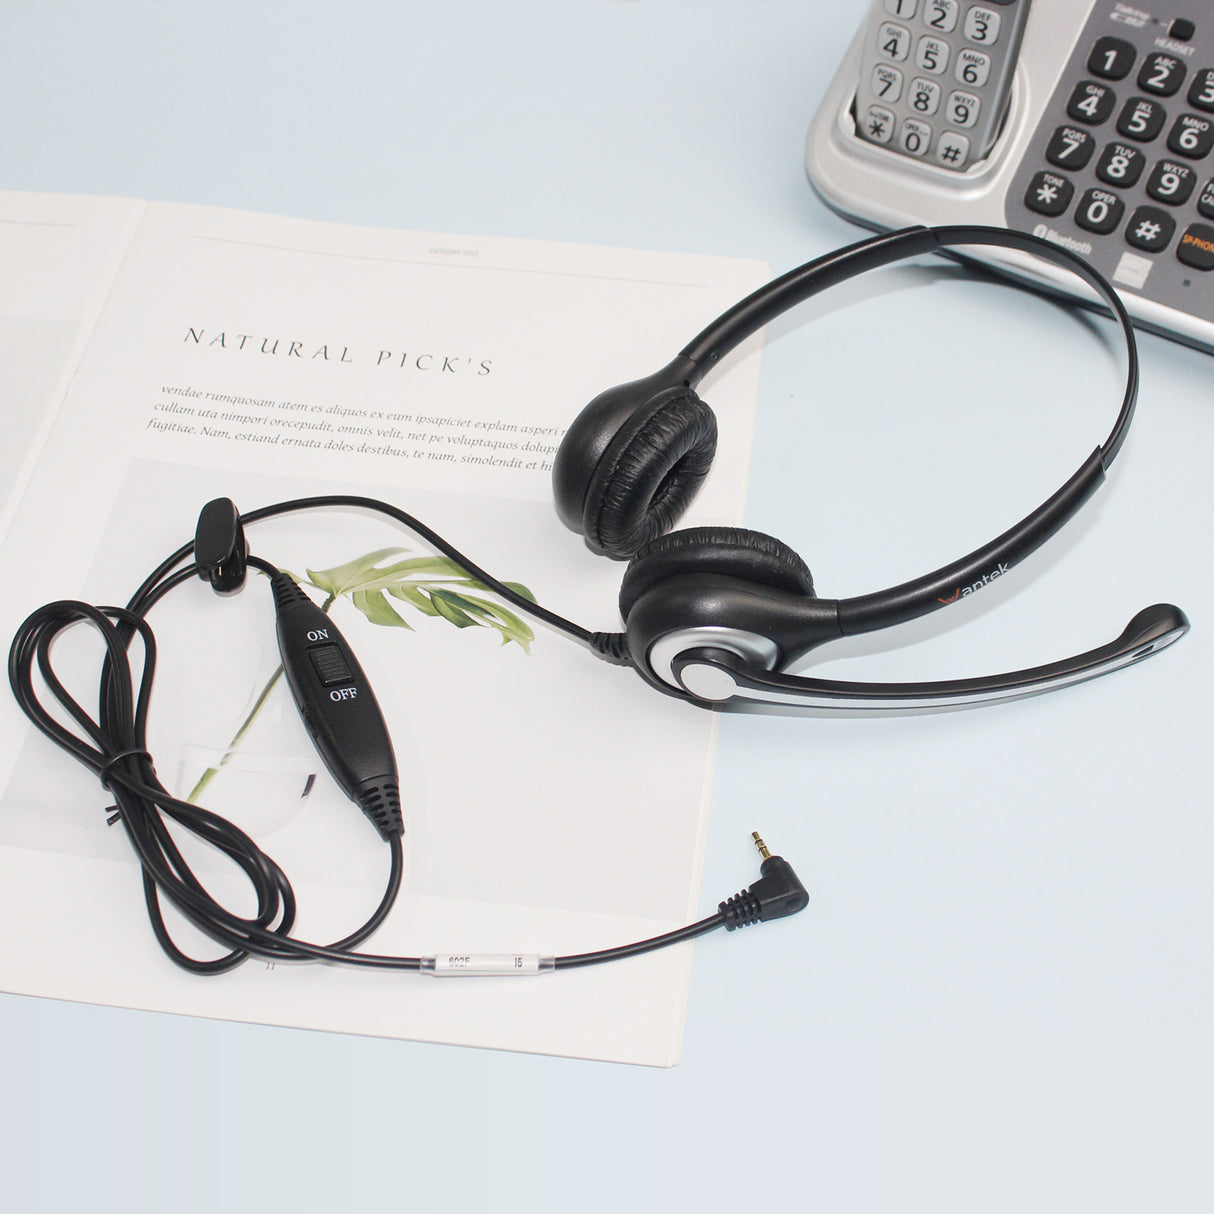 Wantek® h602 2.5mm headset for phone call